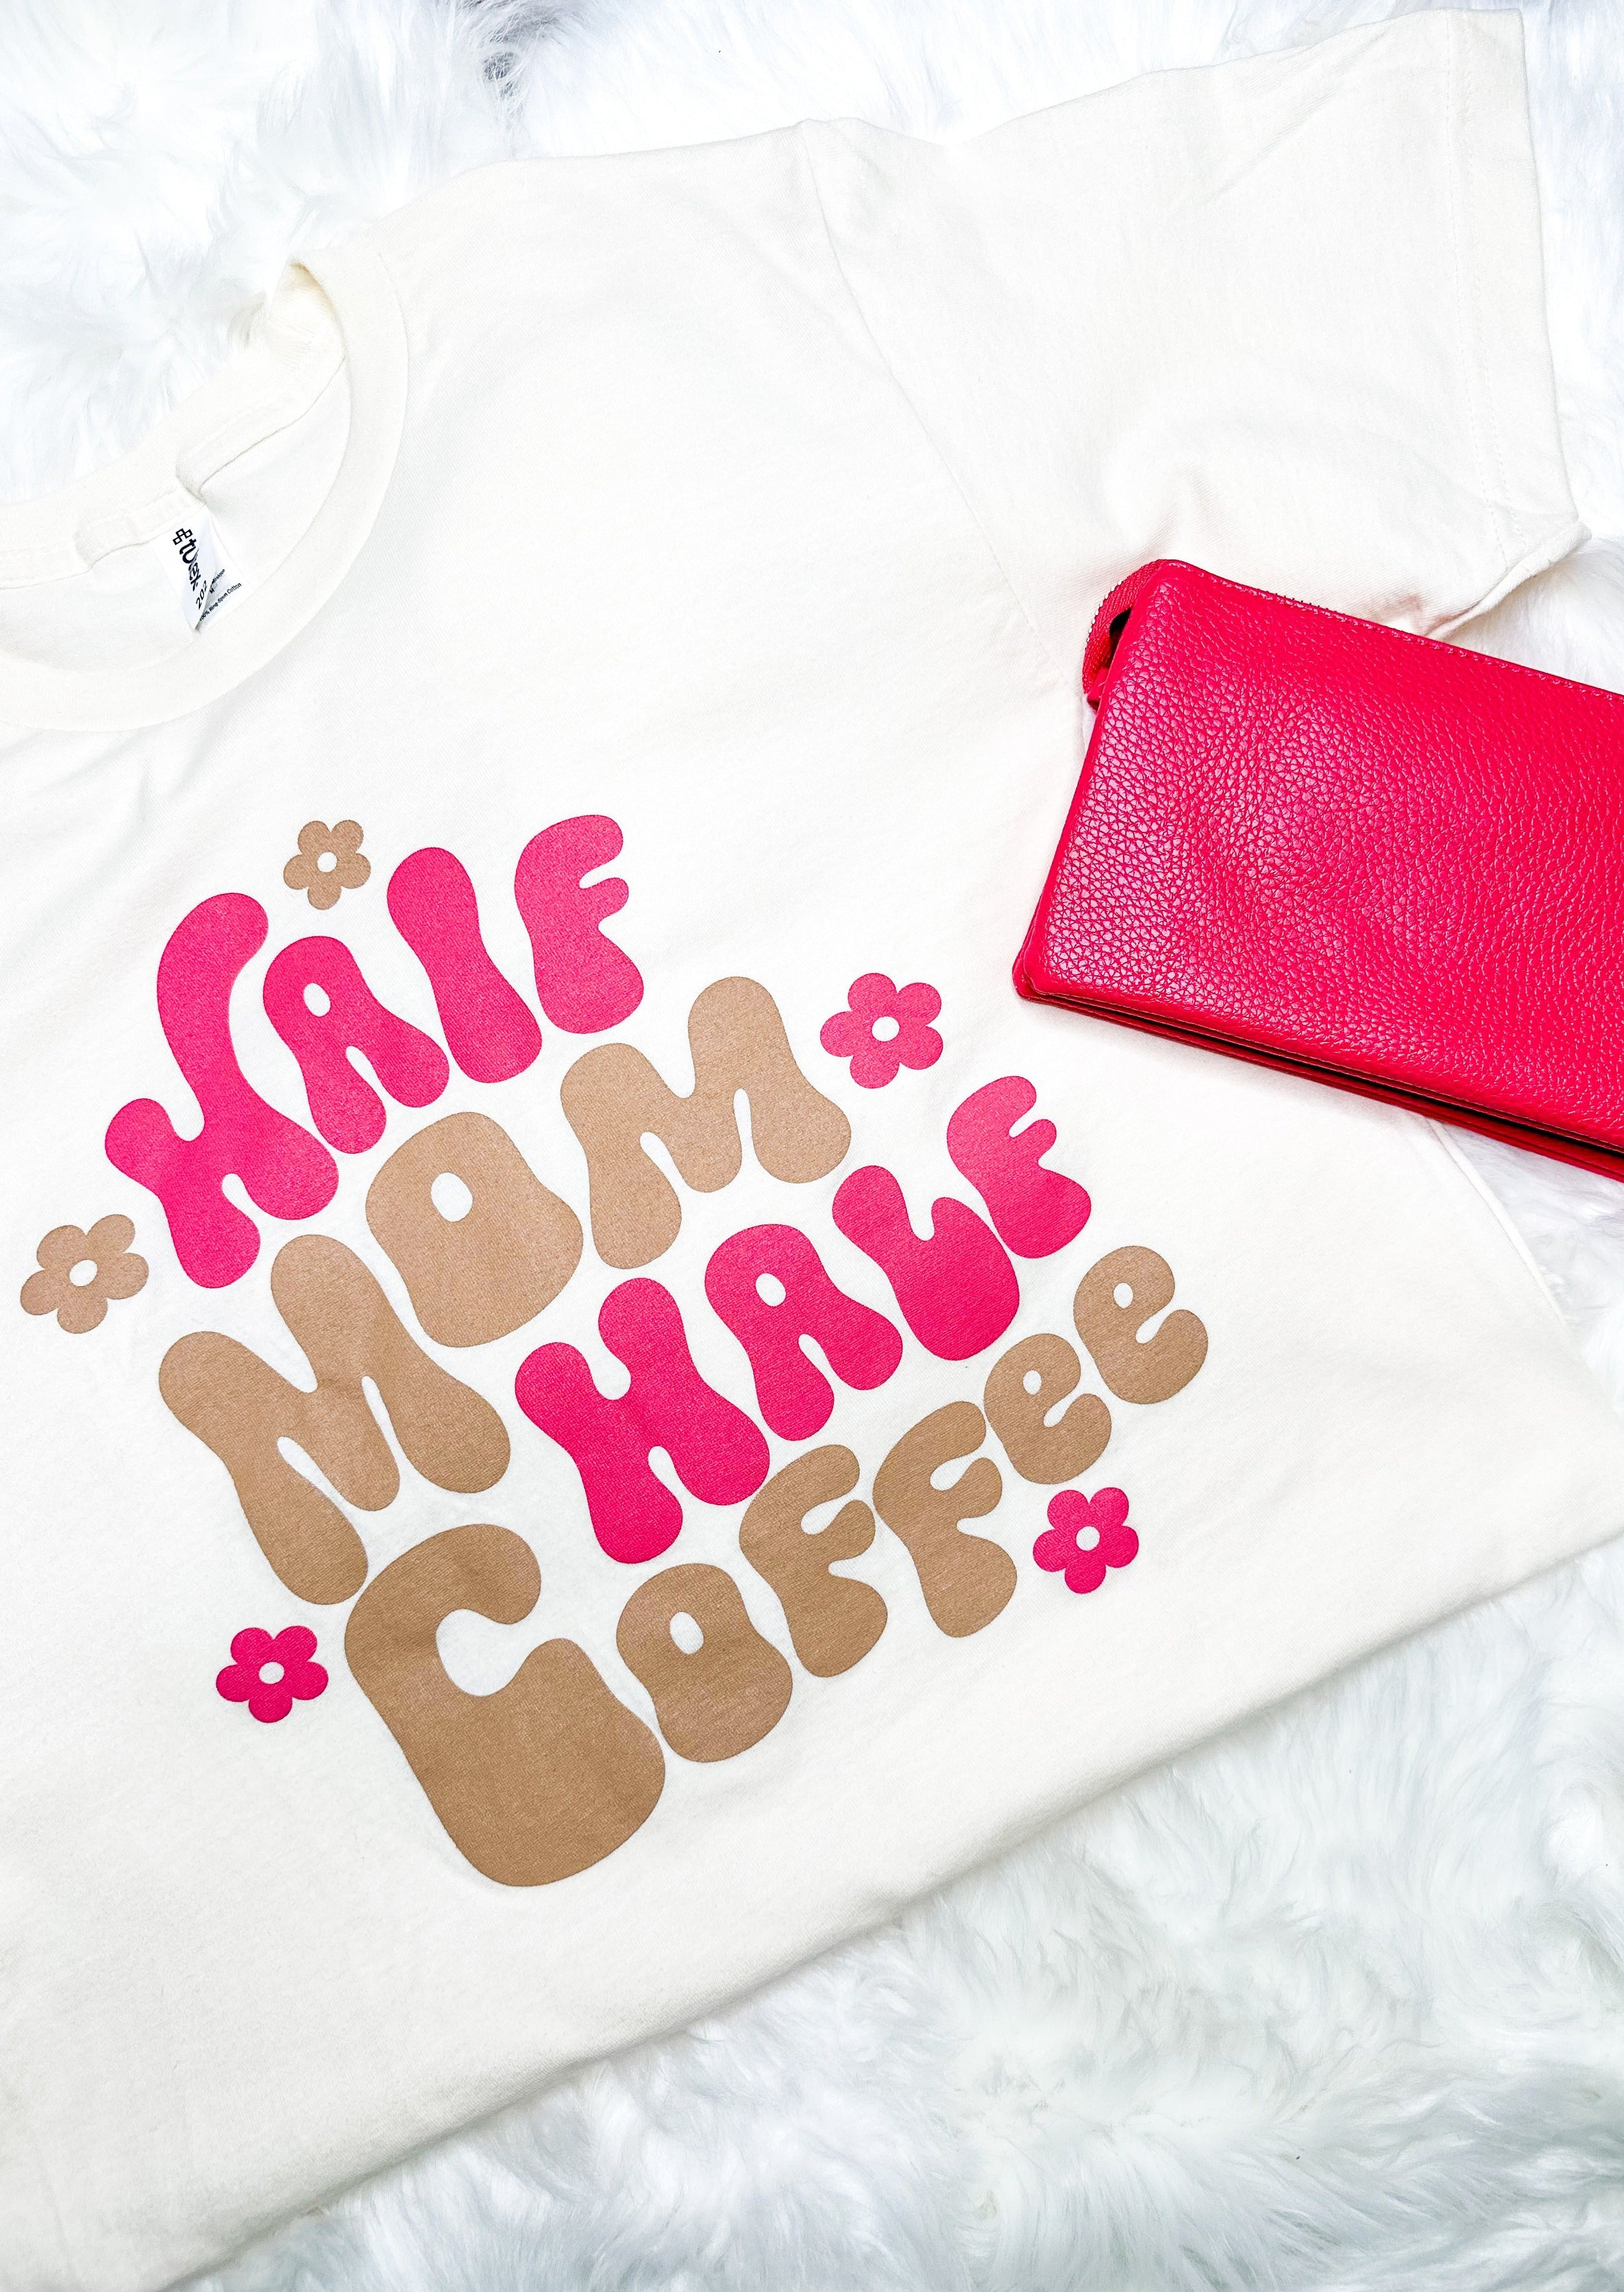 half mom half coffee tee shirt - cream with pink and mocha writing - tultex brand short sleeve tee shirt - flowers around words